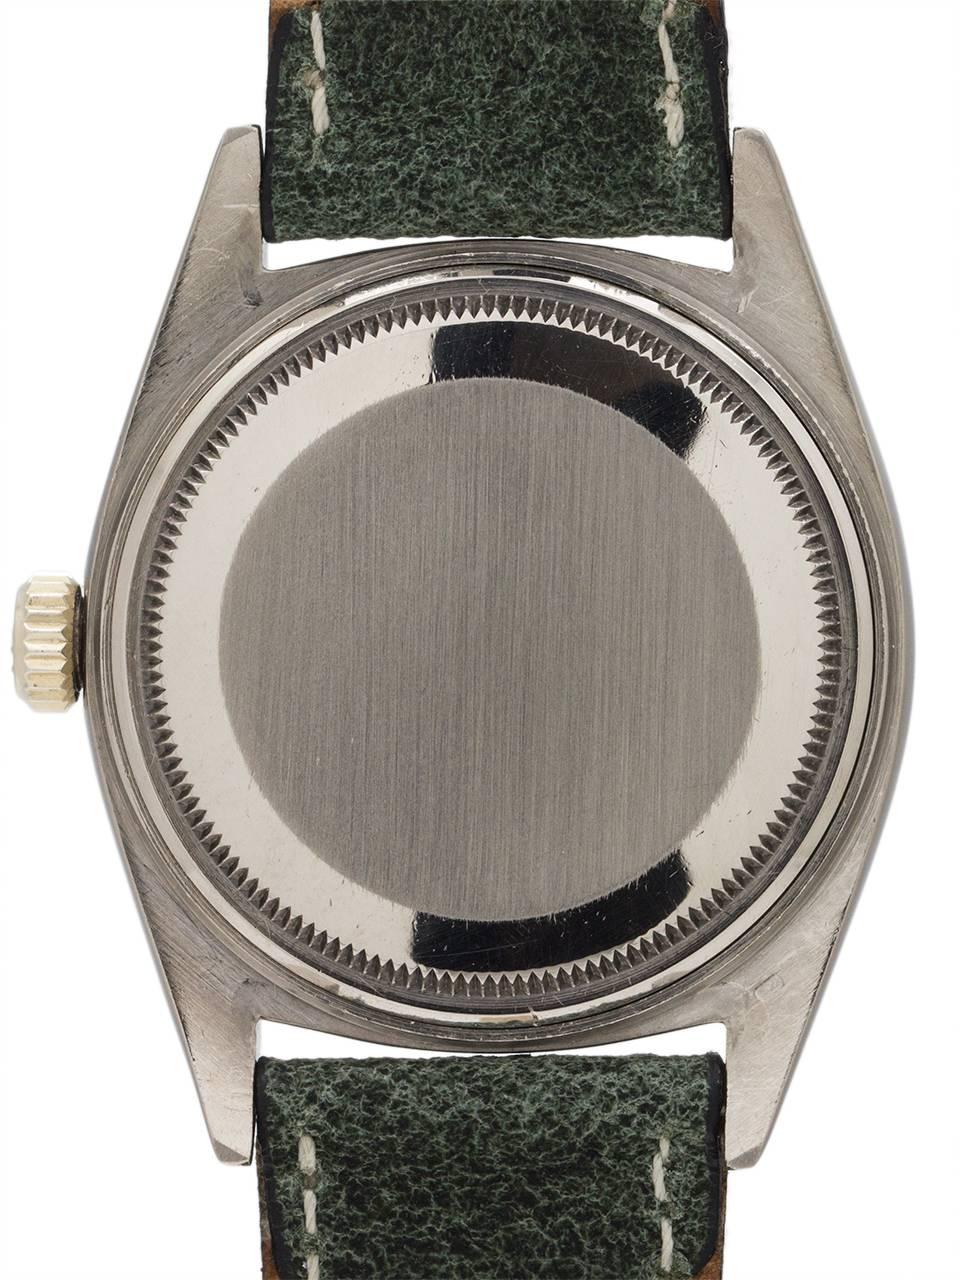 Women's Rolex White Gold Day Date President Wristwatch Ref 1803, circa 1963